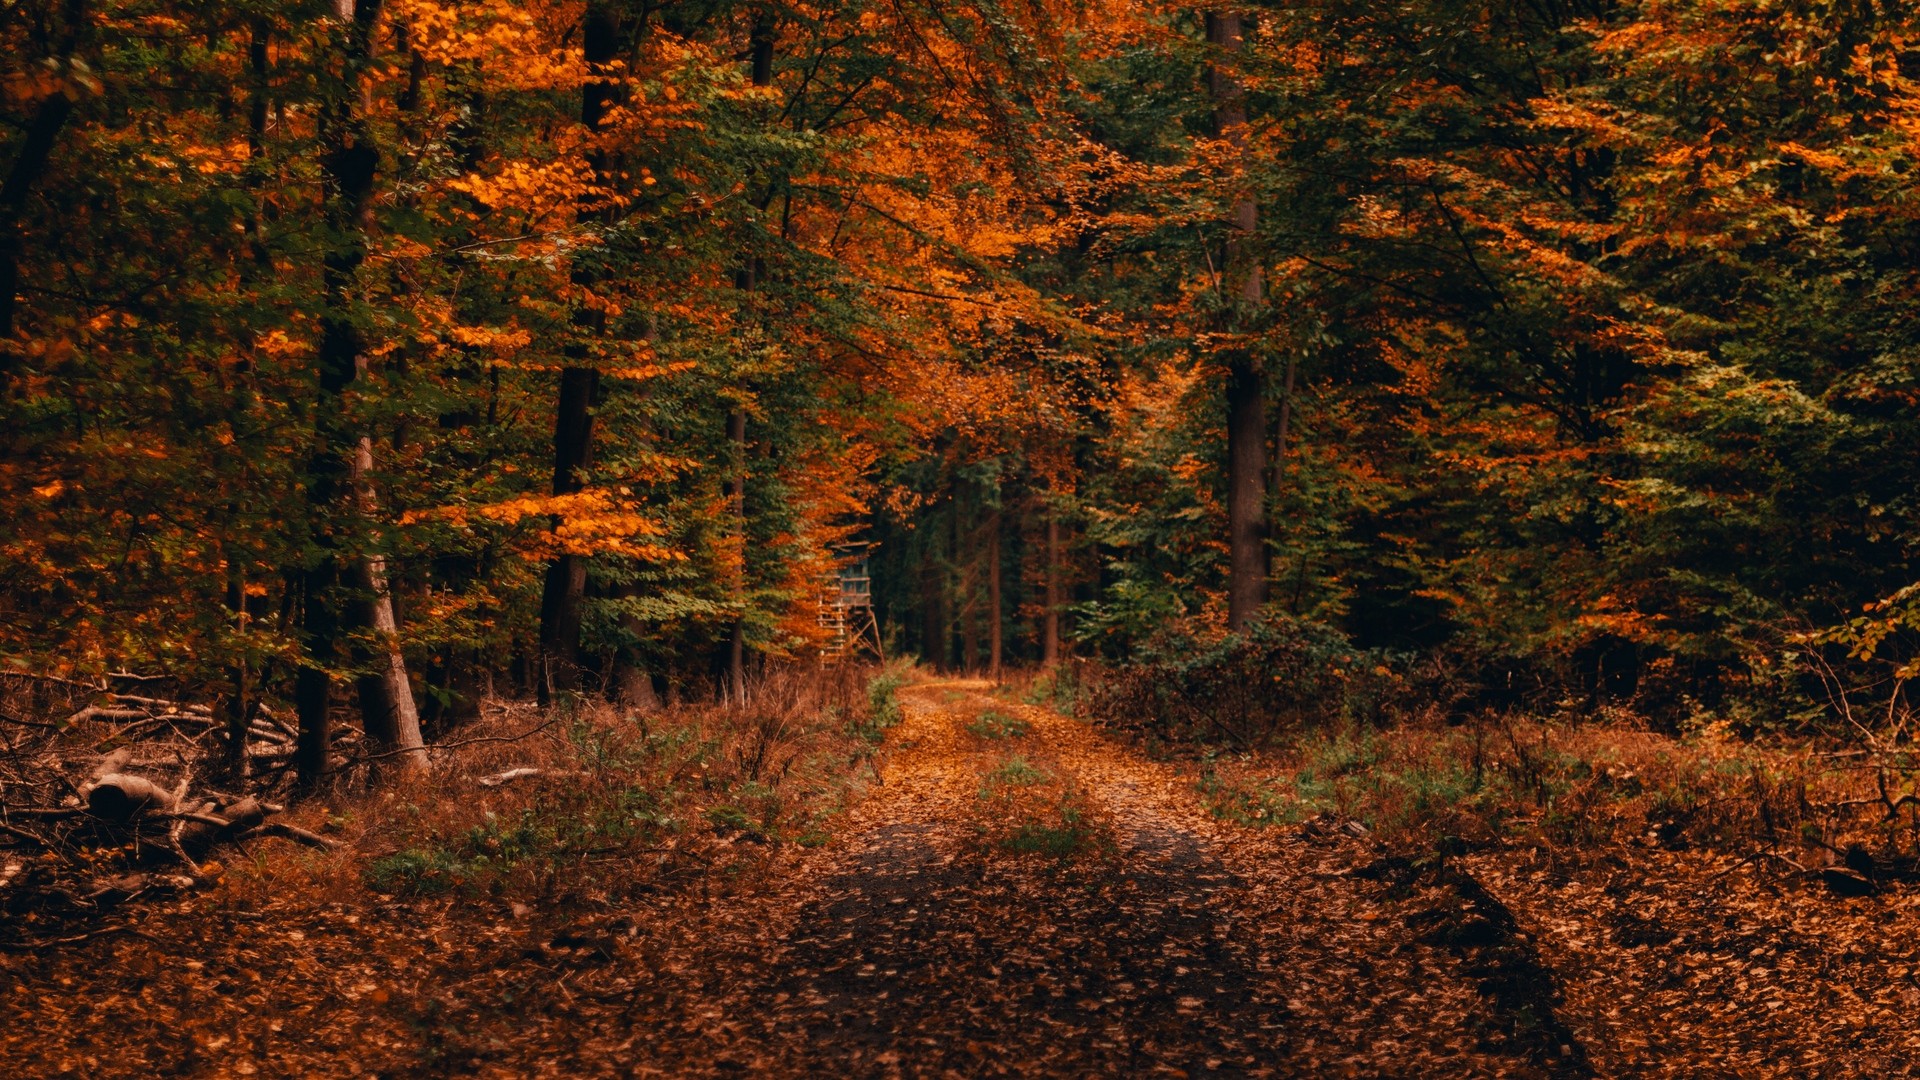 1920x1080 wallpapers: forest, path, autumn, foliage, autumn landscape, trees (image)